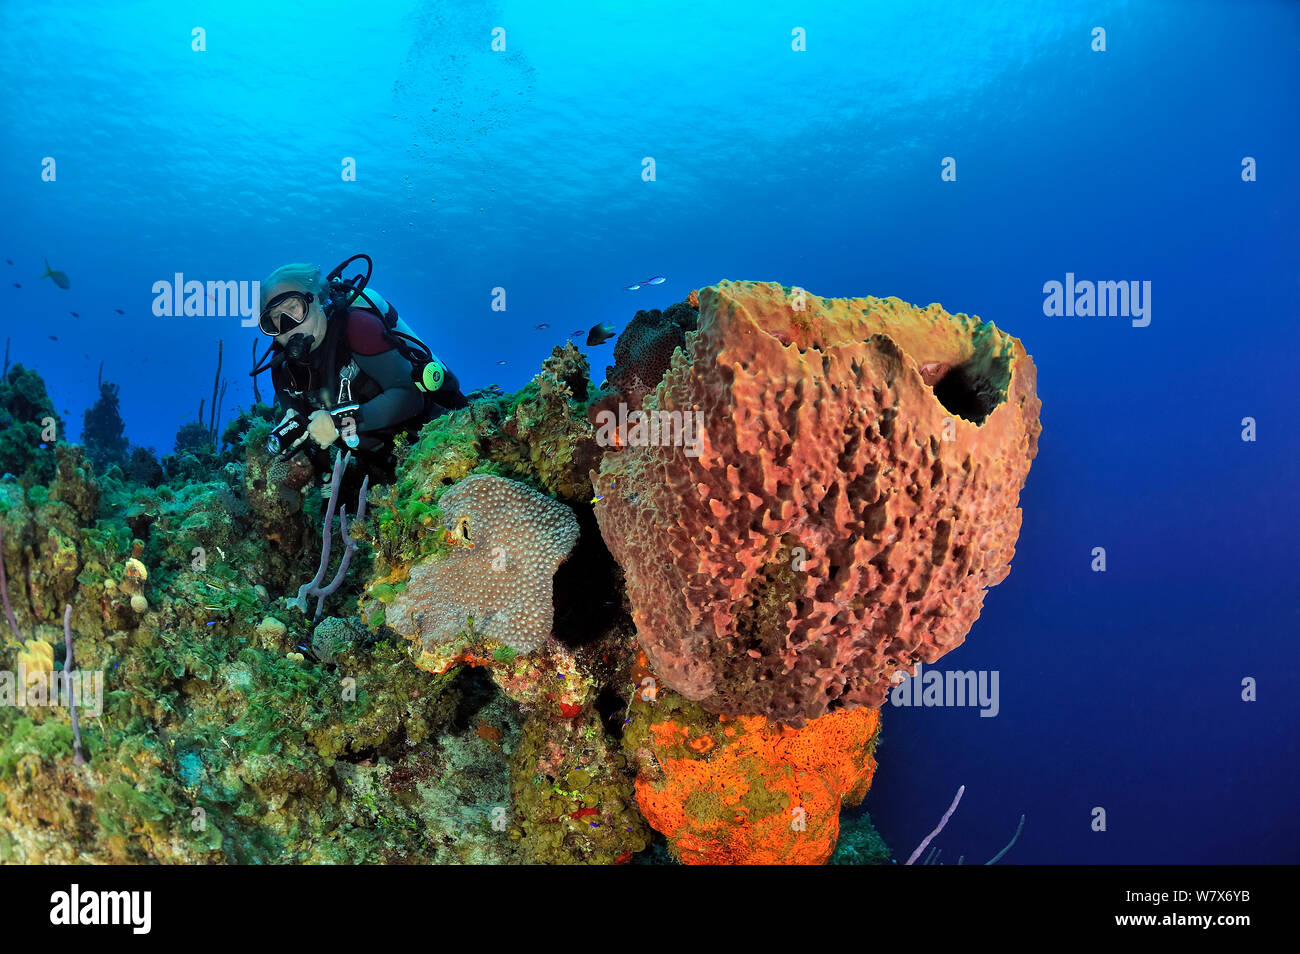 Diver on coral reef with Giant barrel sponge (Xestospongia muta), Elephant ear sponge (Agelas clathrodes) and coral, San Salvador Island / Colombus Island, Bahamas. Caribbean. June 2013. Stock Photo